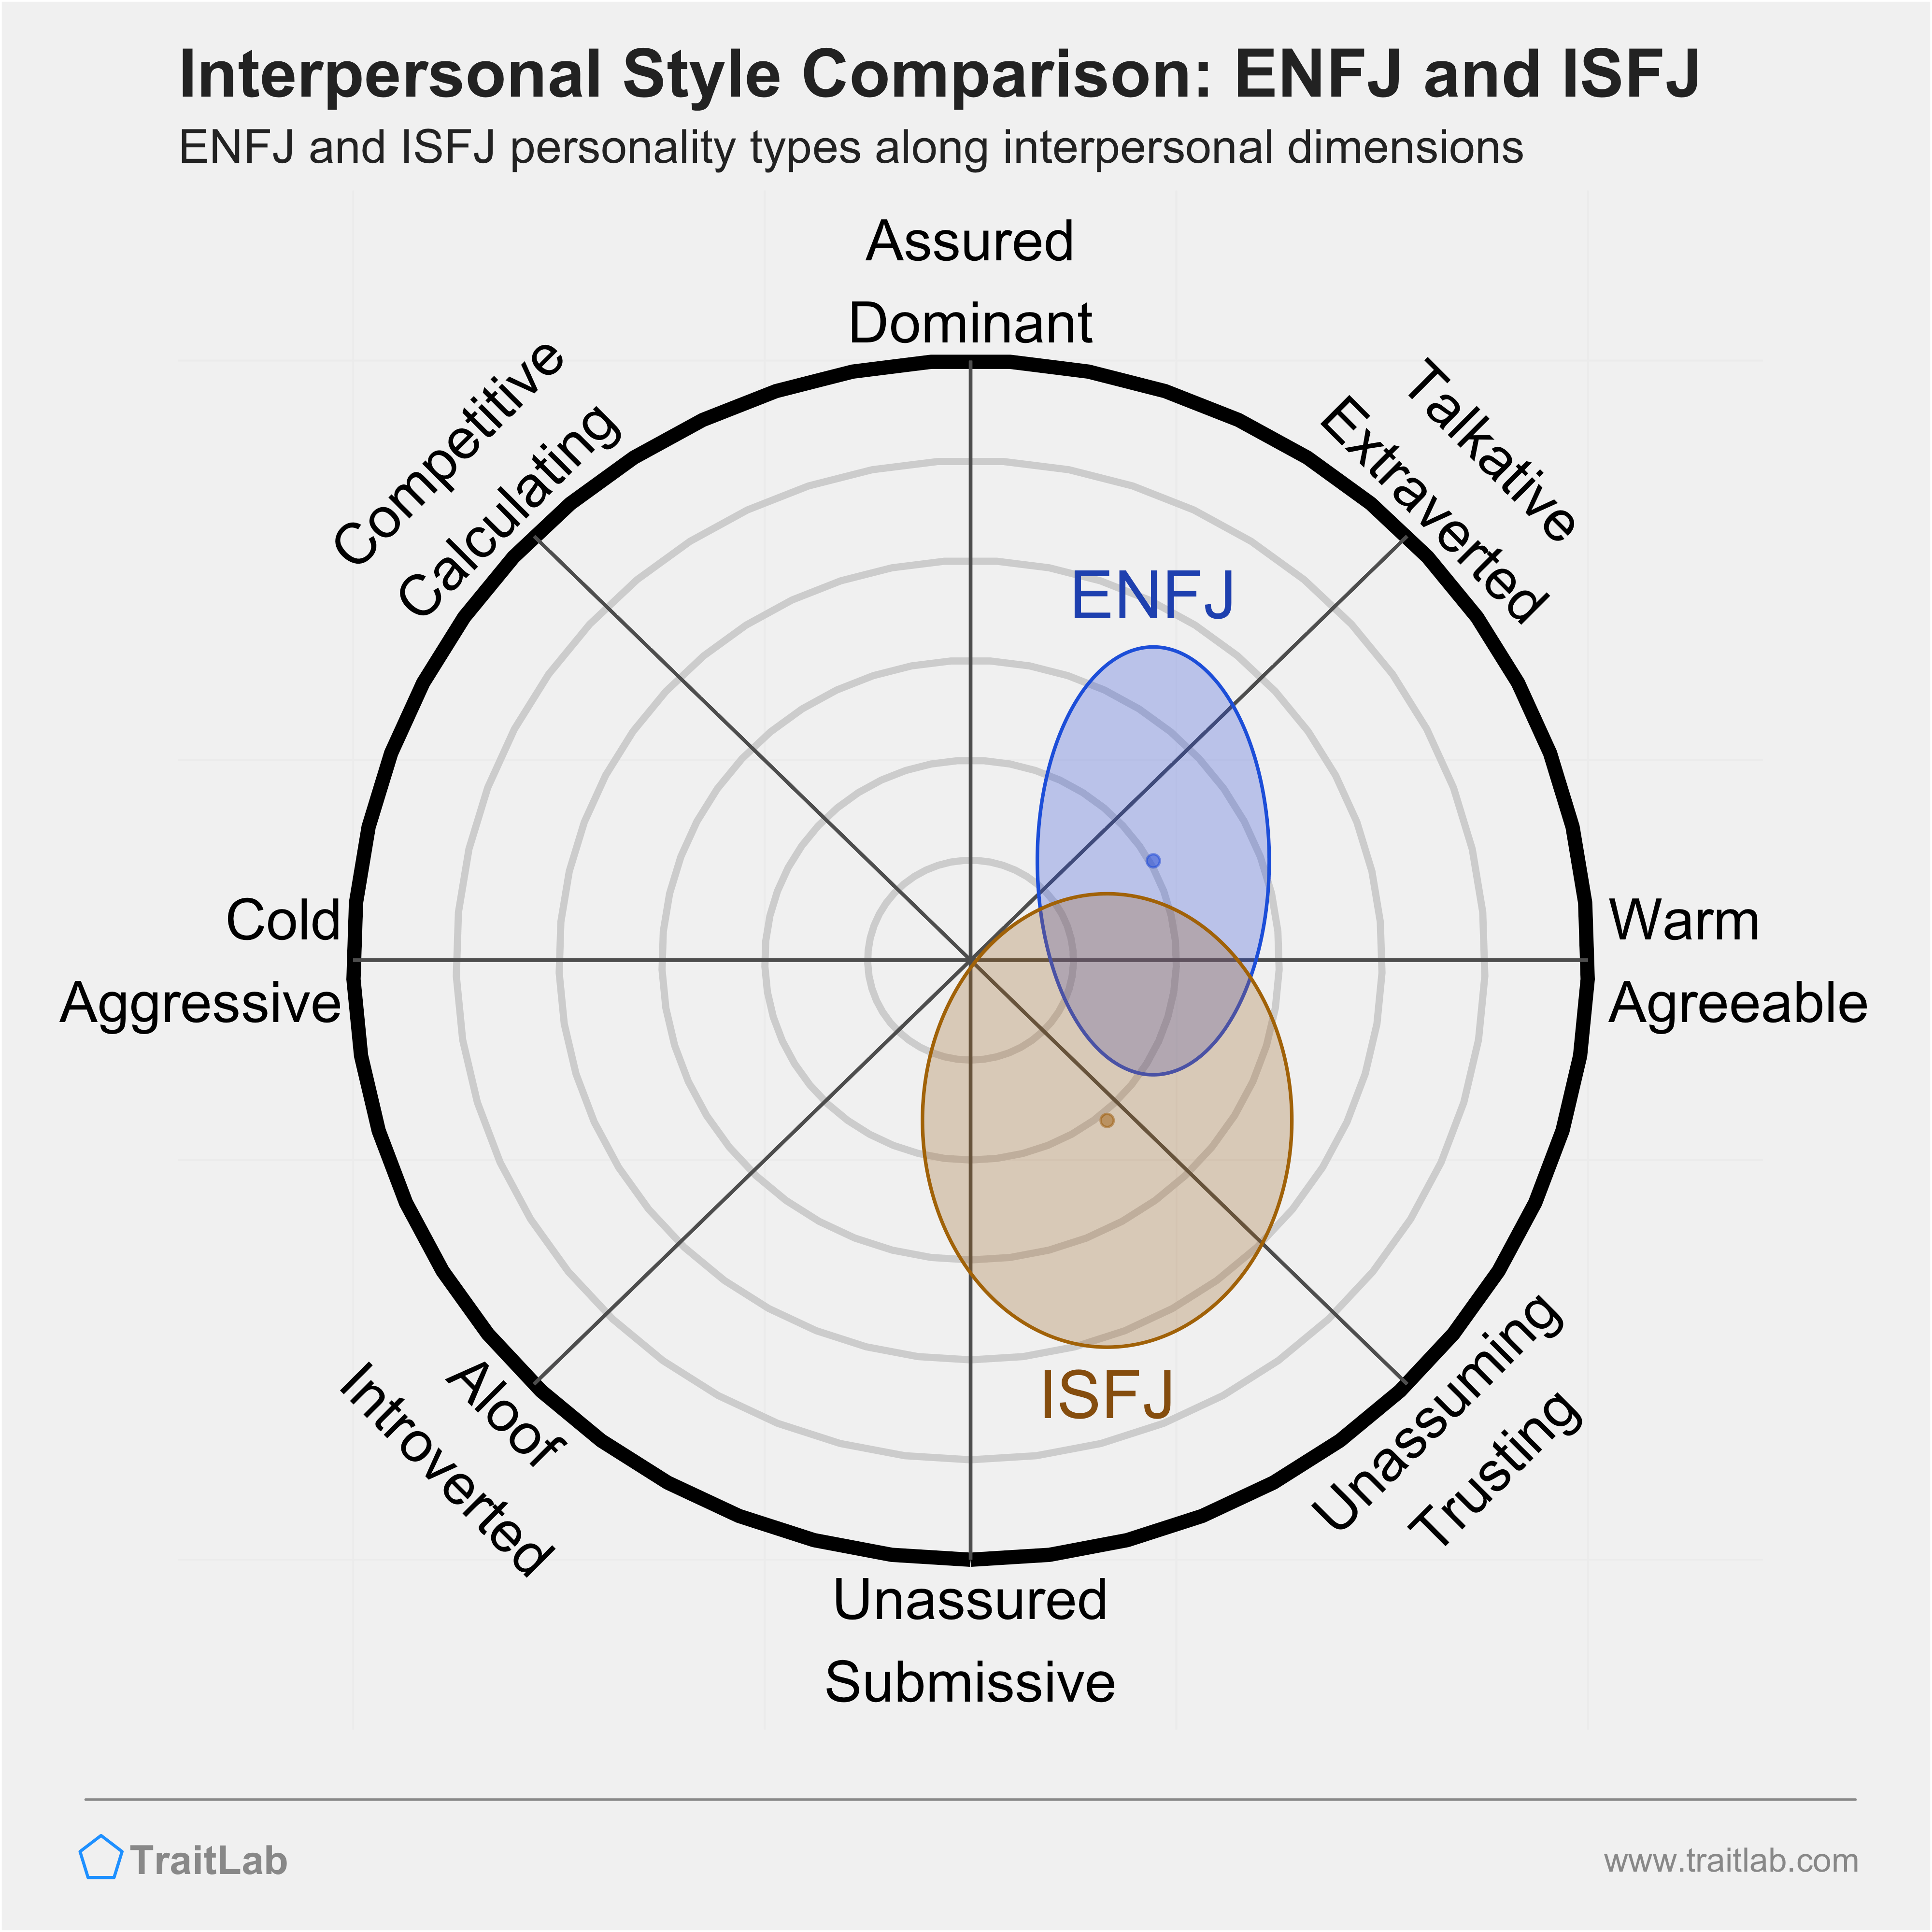 ENFJ and ISFJ comparison across interpersonal dimensions